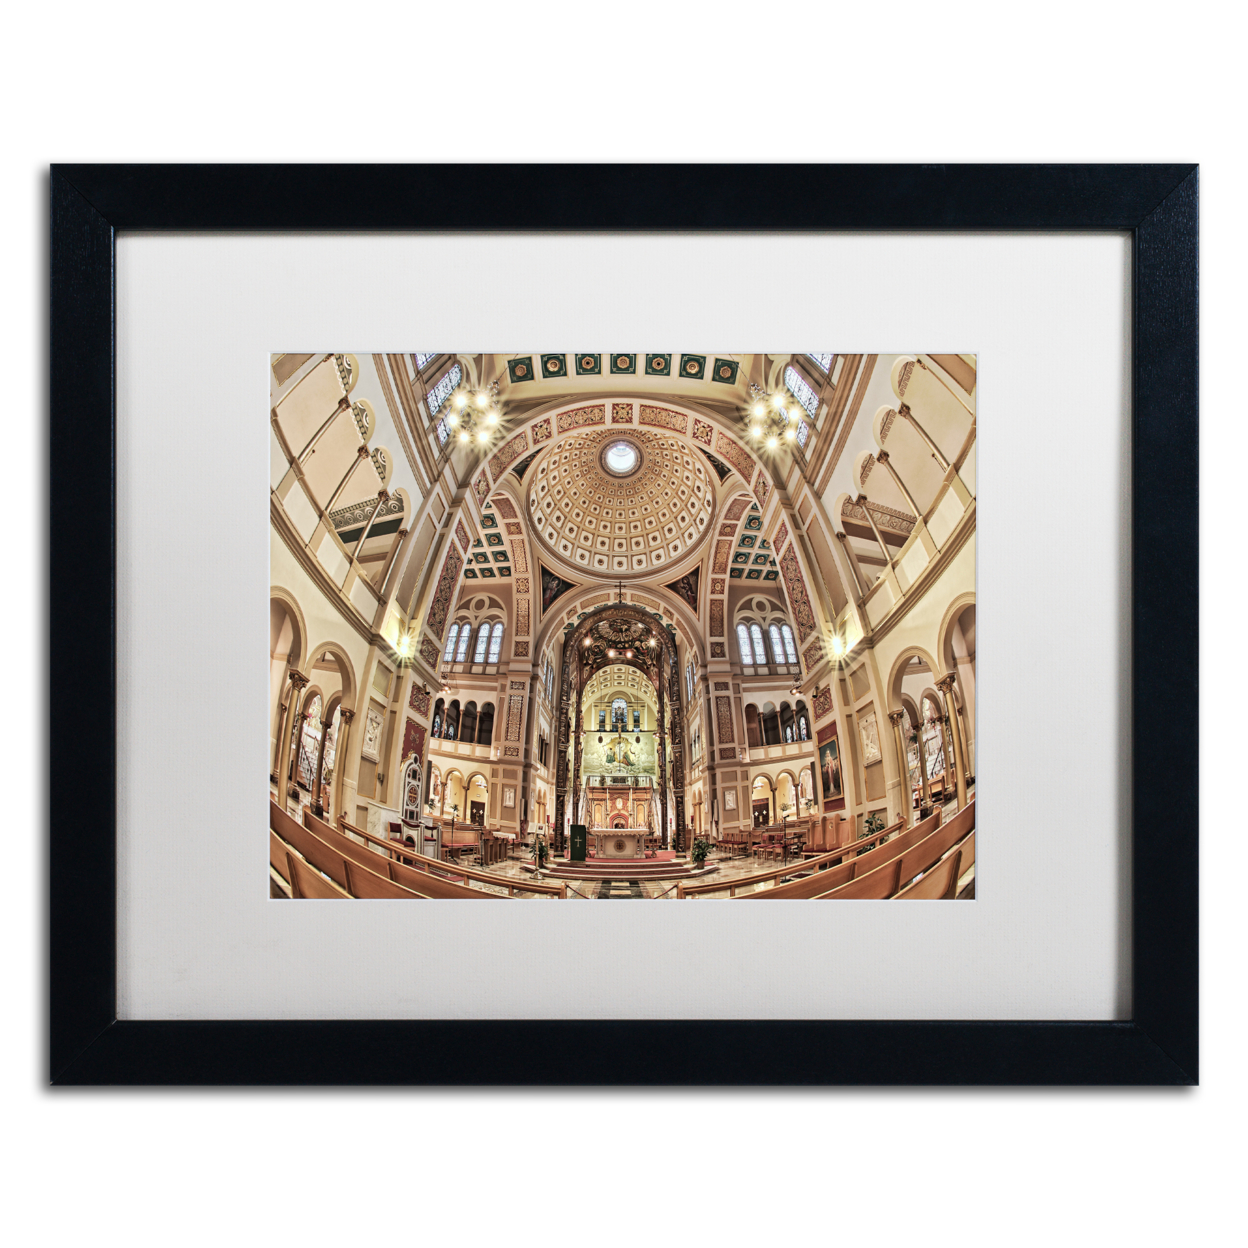 Gregory O'Hanlon 'Franciscan Monastery' Black Wooden Framed Art 18 X 22 Inches